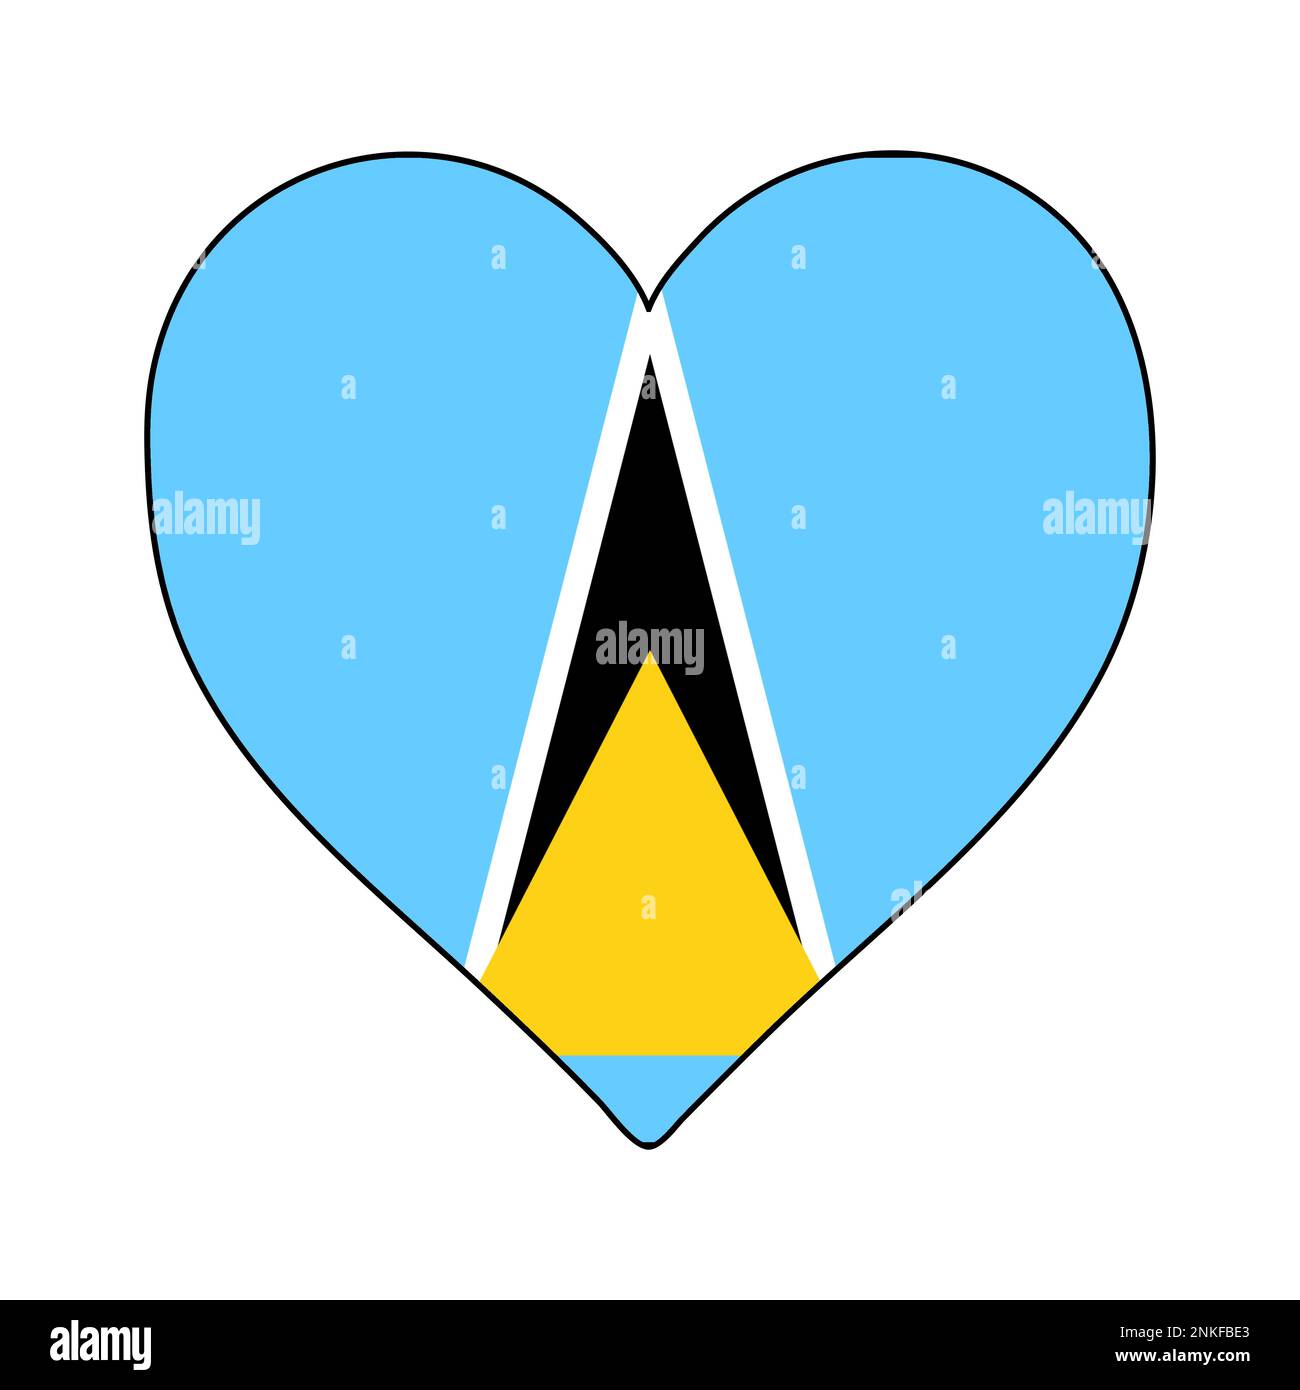 St Lucia Heart Shape Flag. Love St Lucia. Visit St Lucia. Caribbean. Latin America. Vector Illustration Graphic Design. Stock Vector